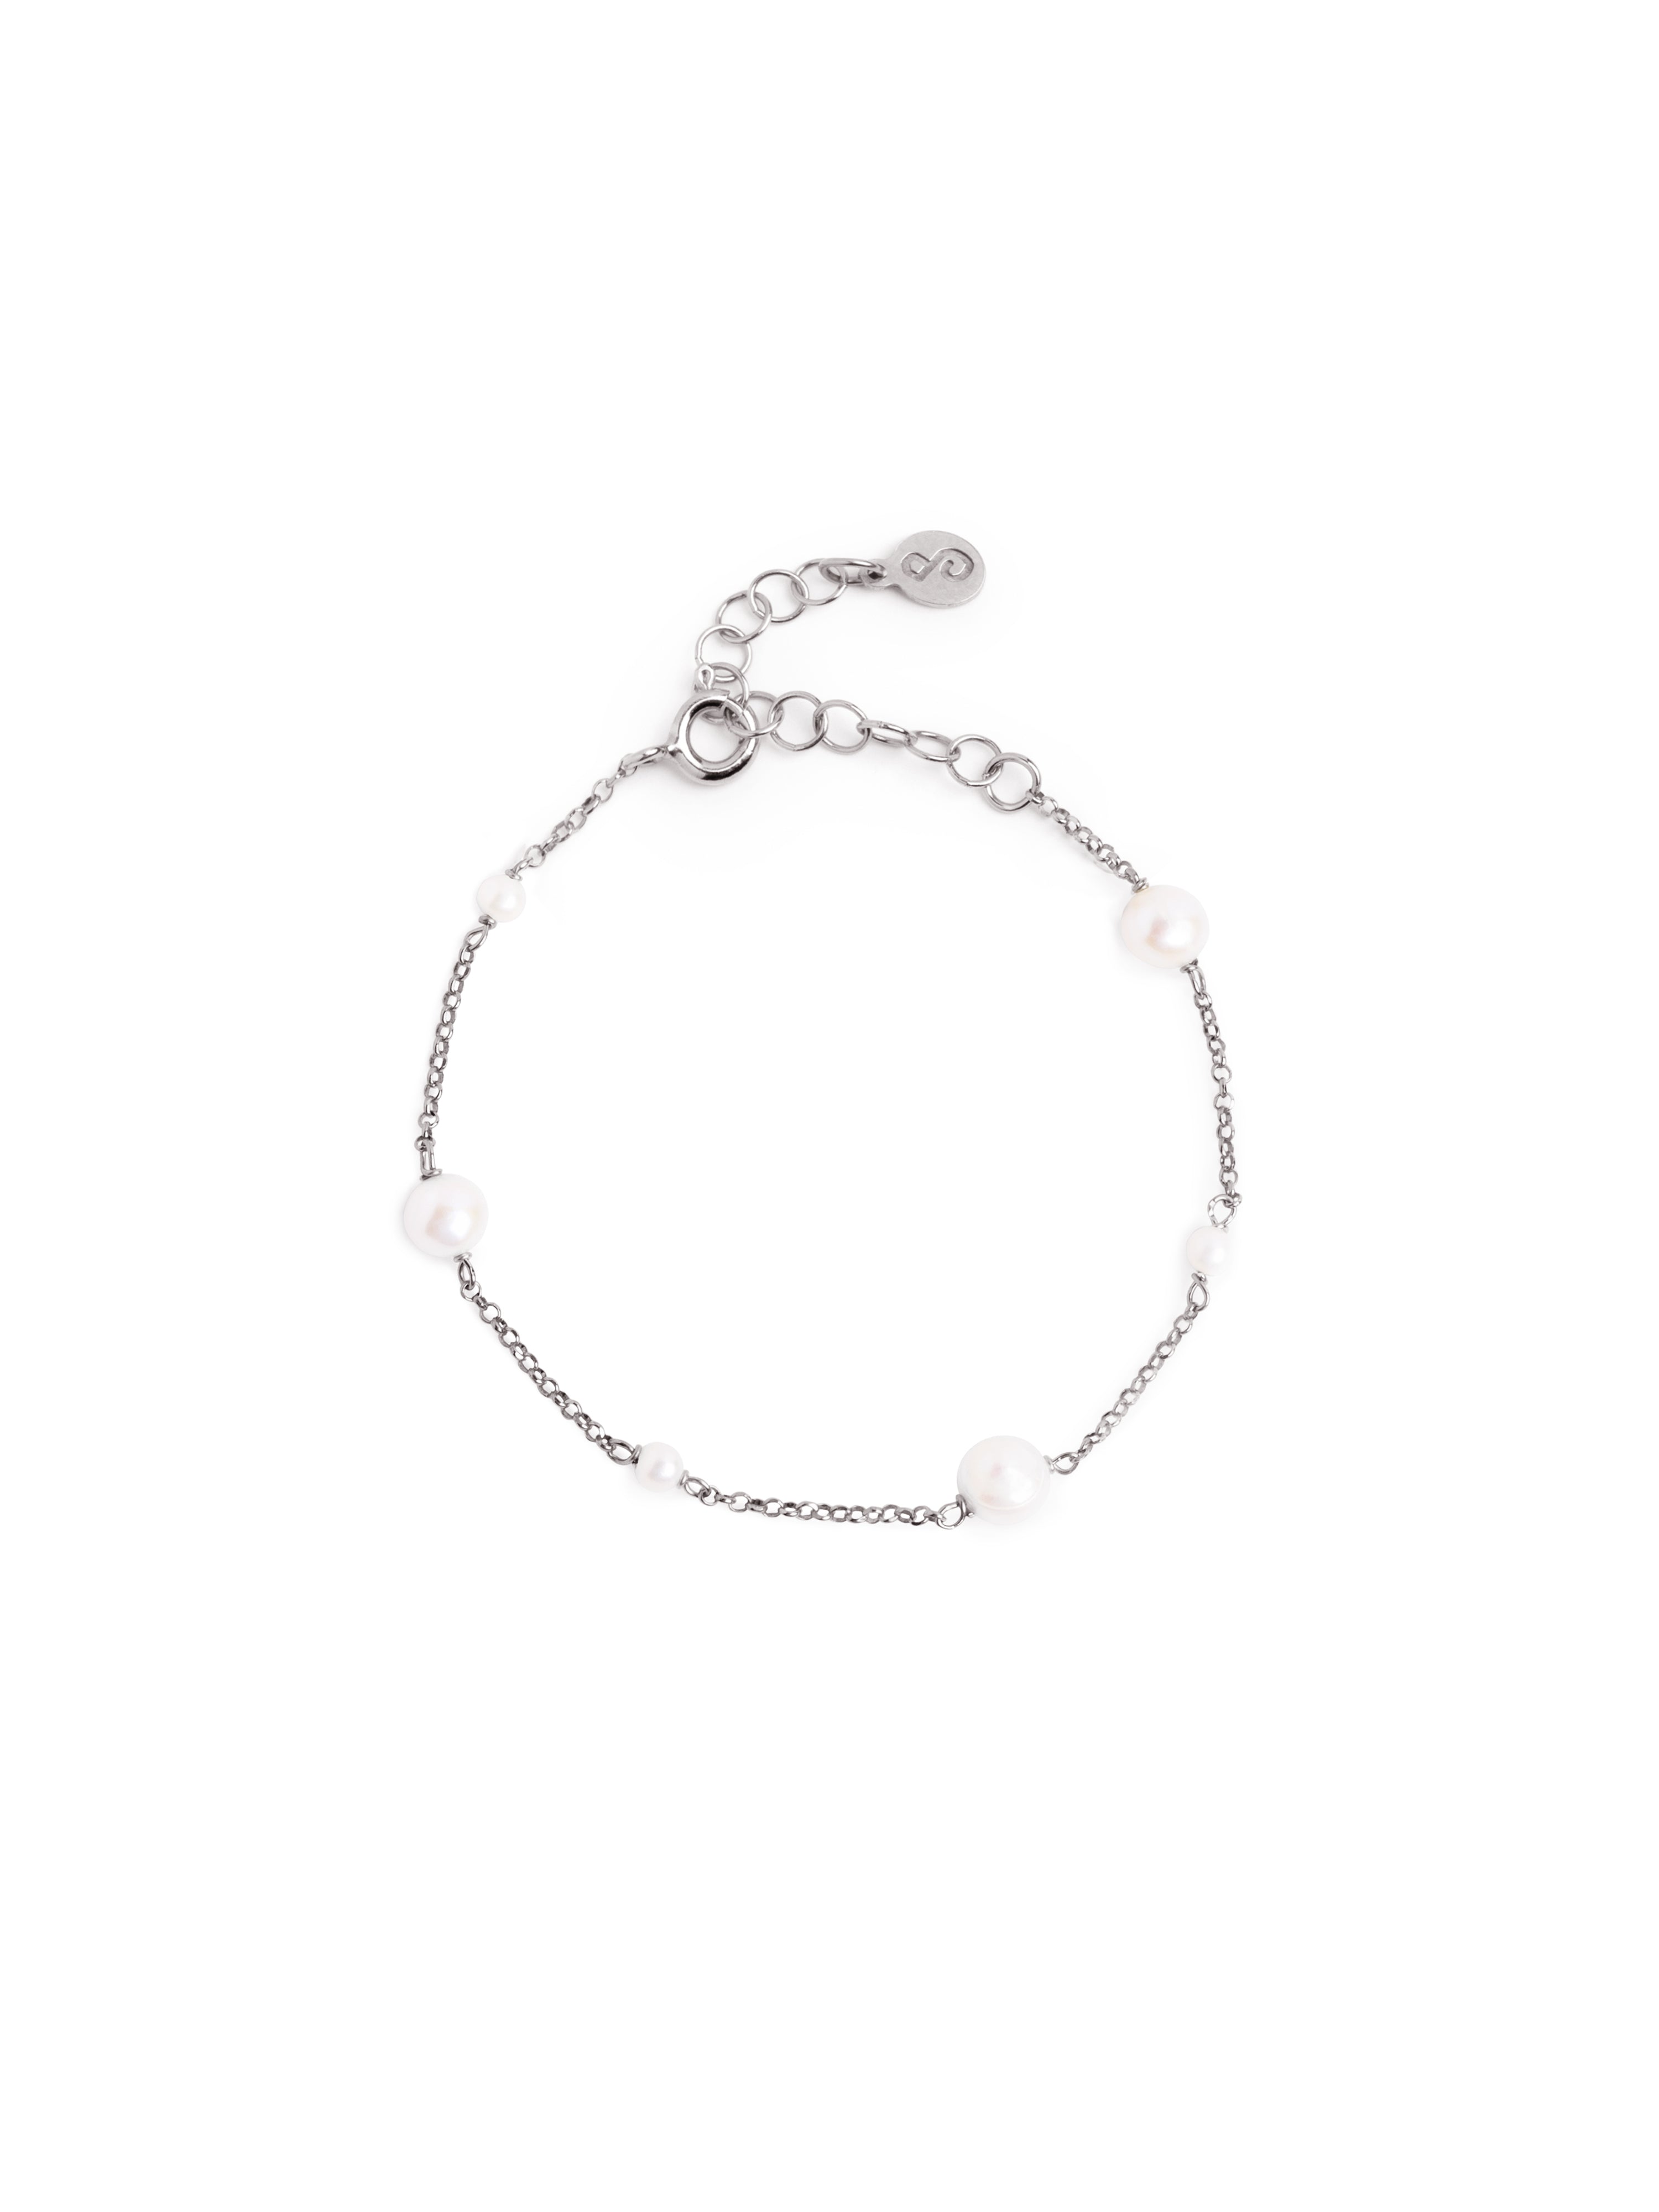 Pearl & Pearls Silver Bracelet